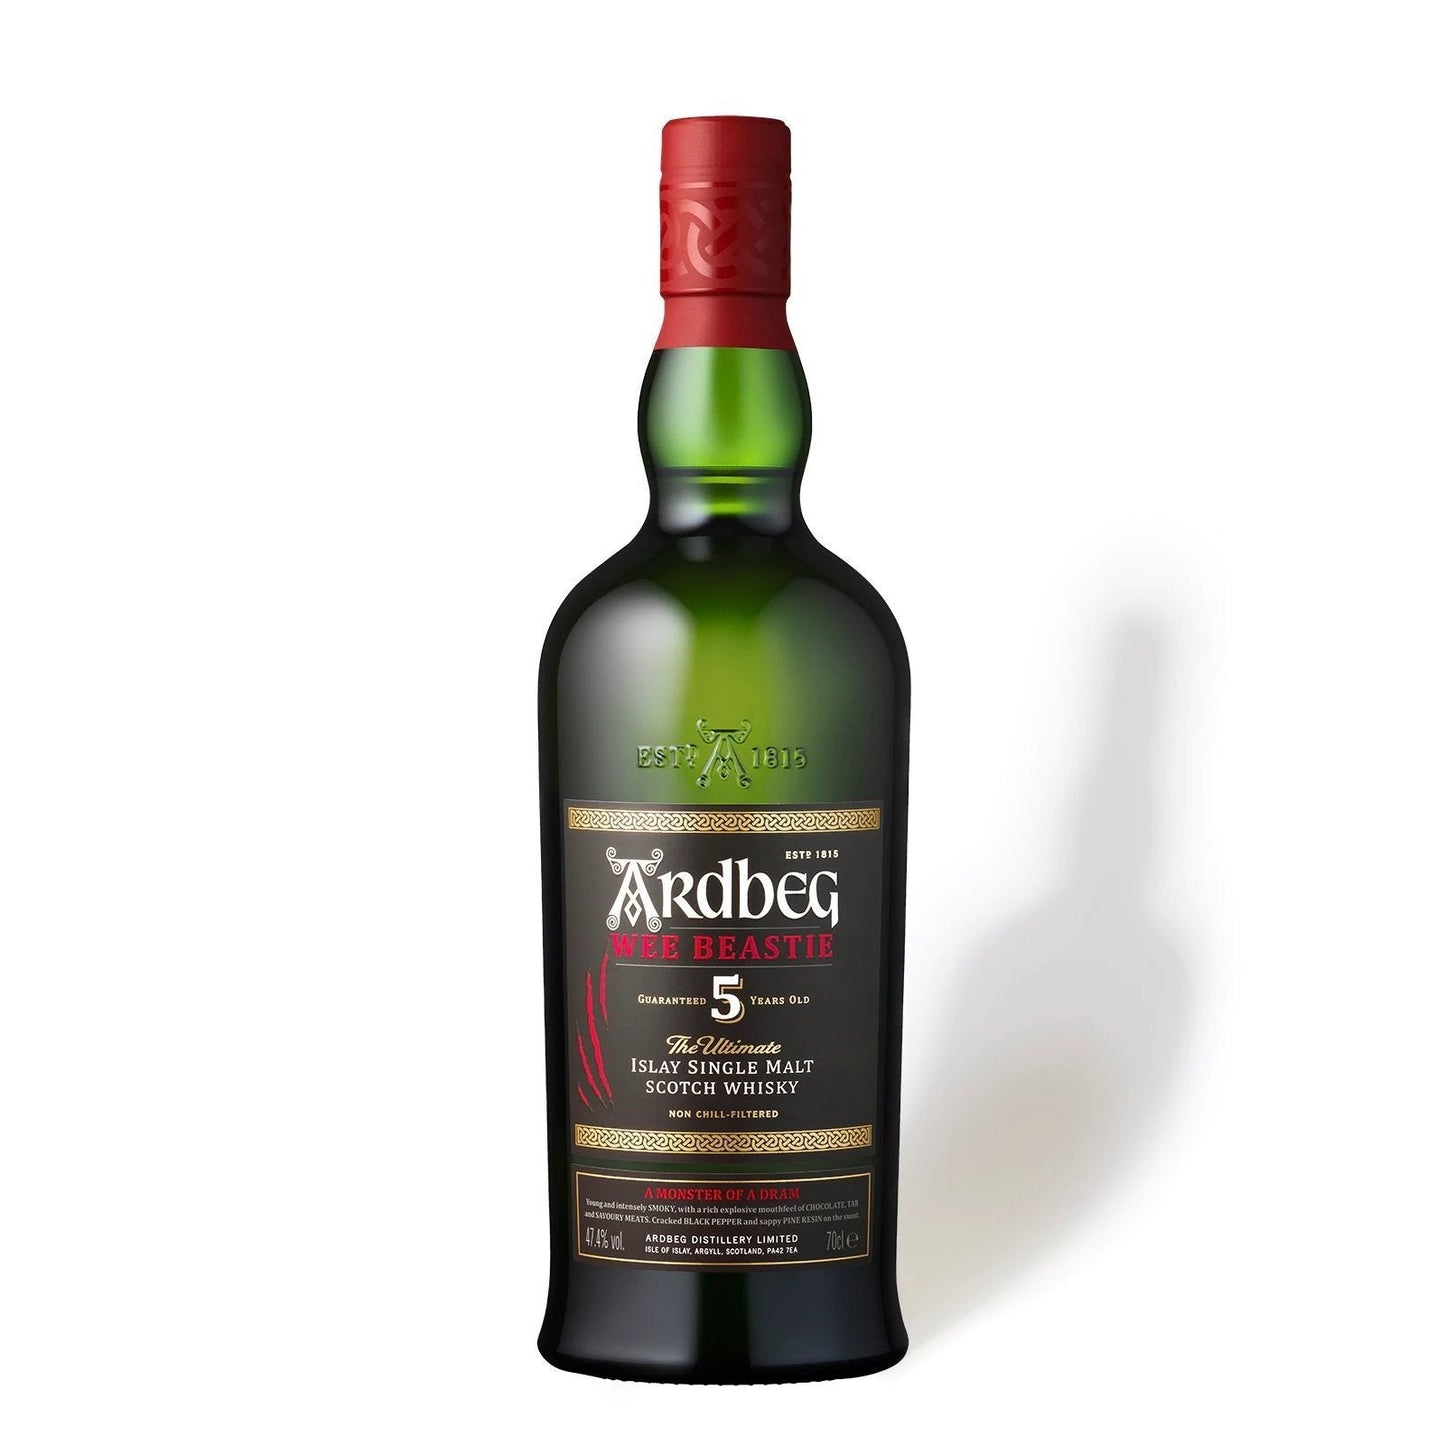 Ardbeg Wee Beastie 5 Year Old - Single Malt Scotch Whisky-Single Malt Scotch Whisky-5010494961577-Fountainhall Wines